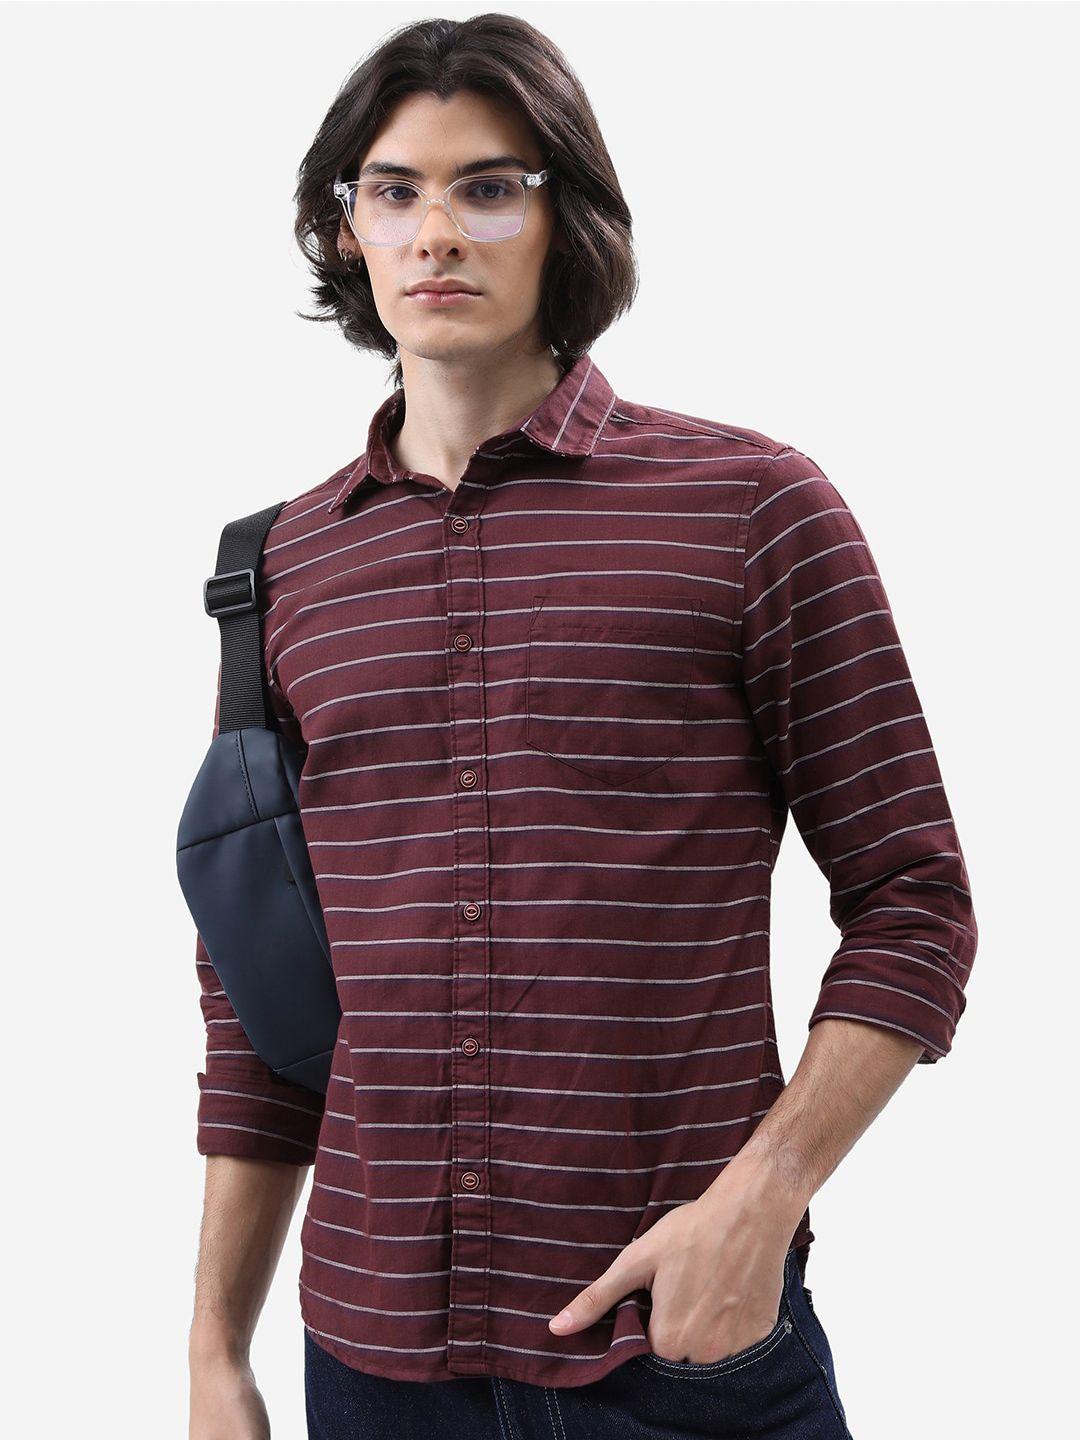 ketch-men-comfort-slim-fit-striped-casual-shirt